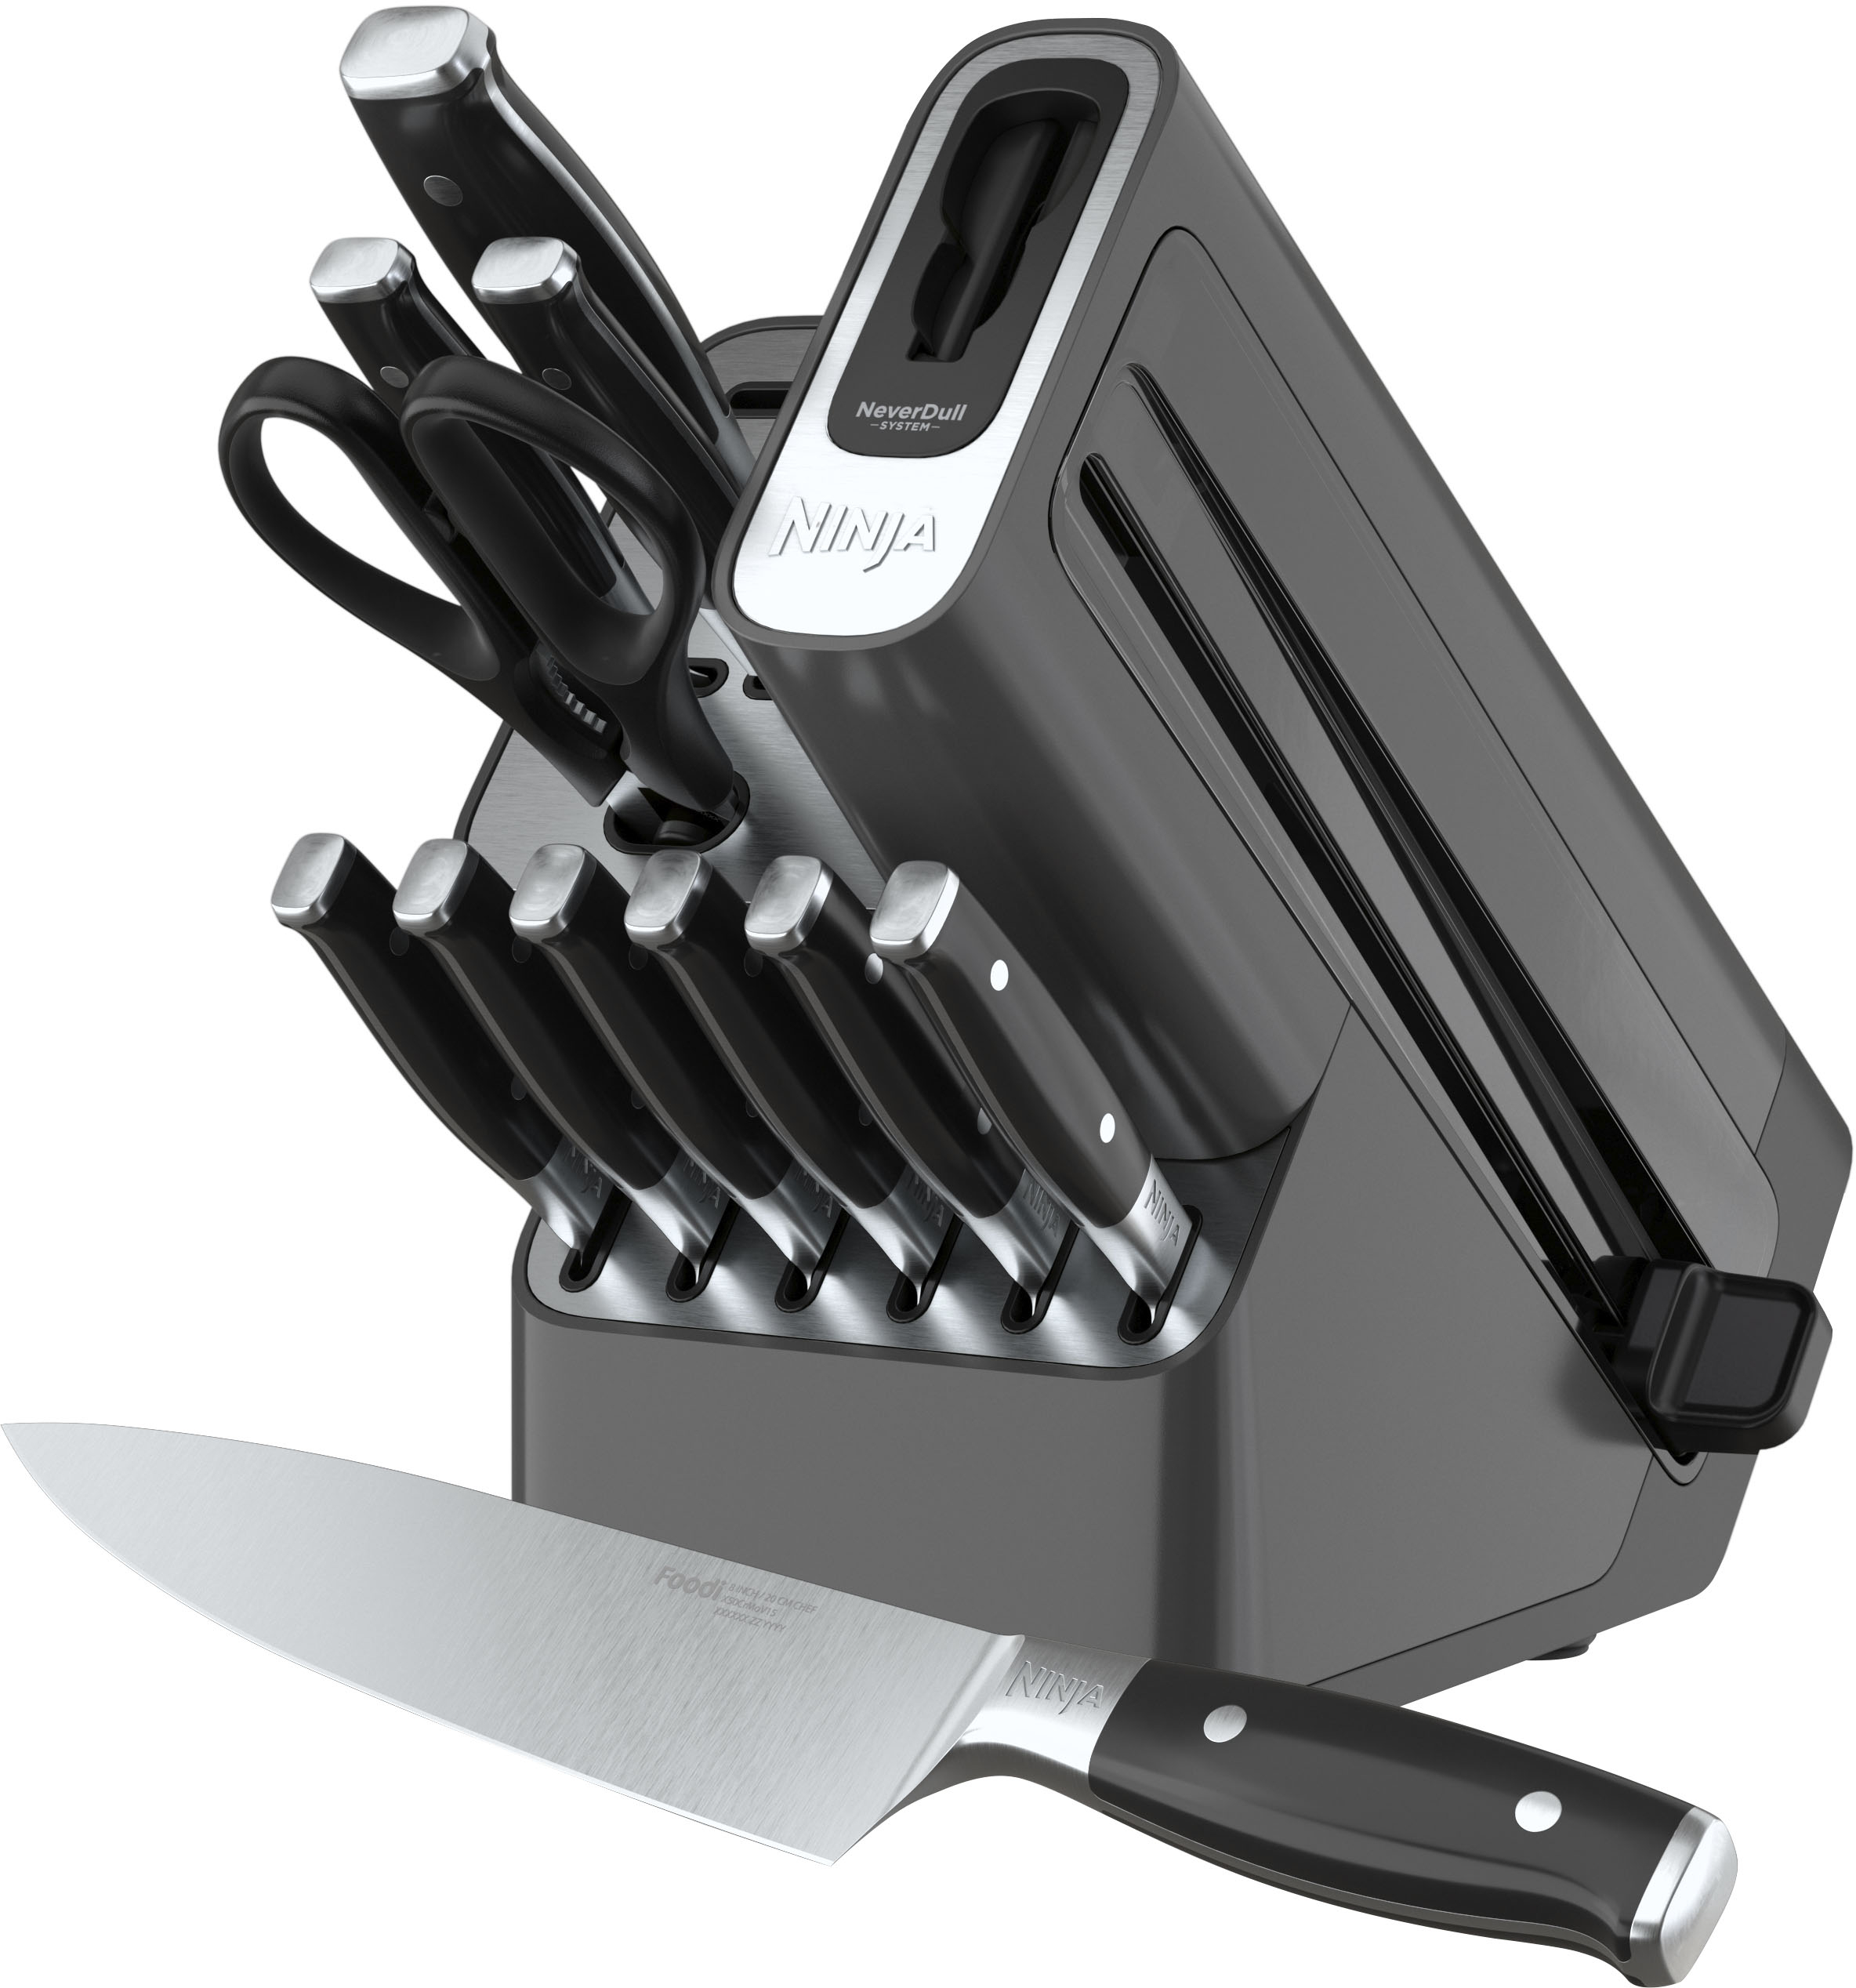 Henckels Graphite 18-Pc Knife Block Set - Grey